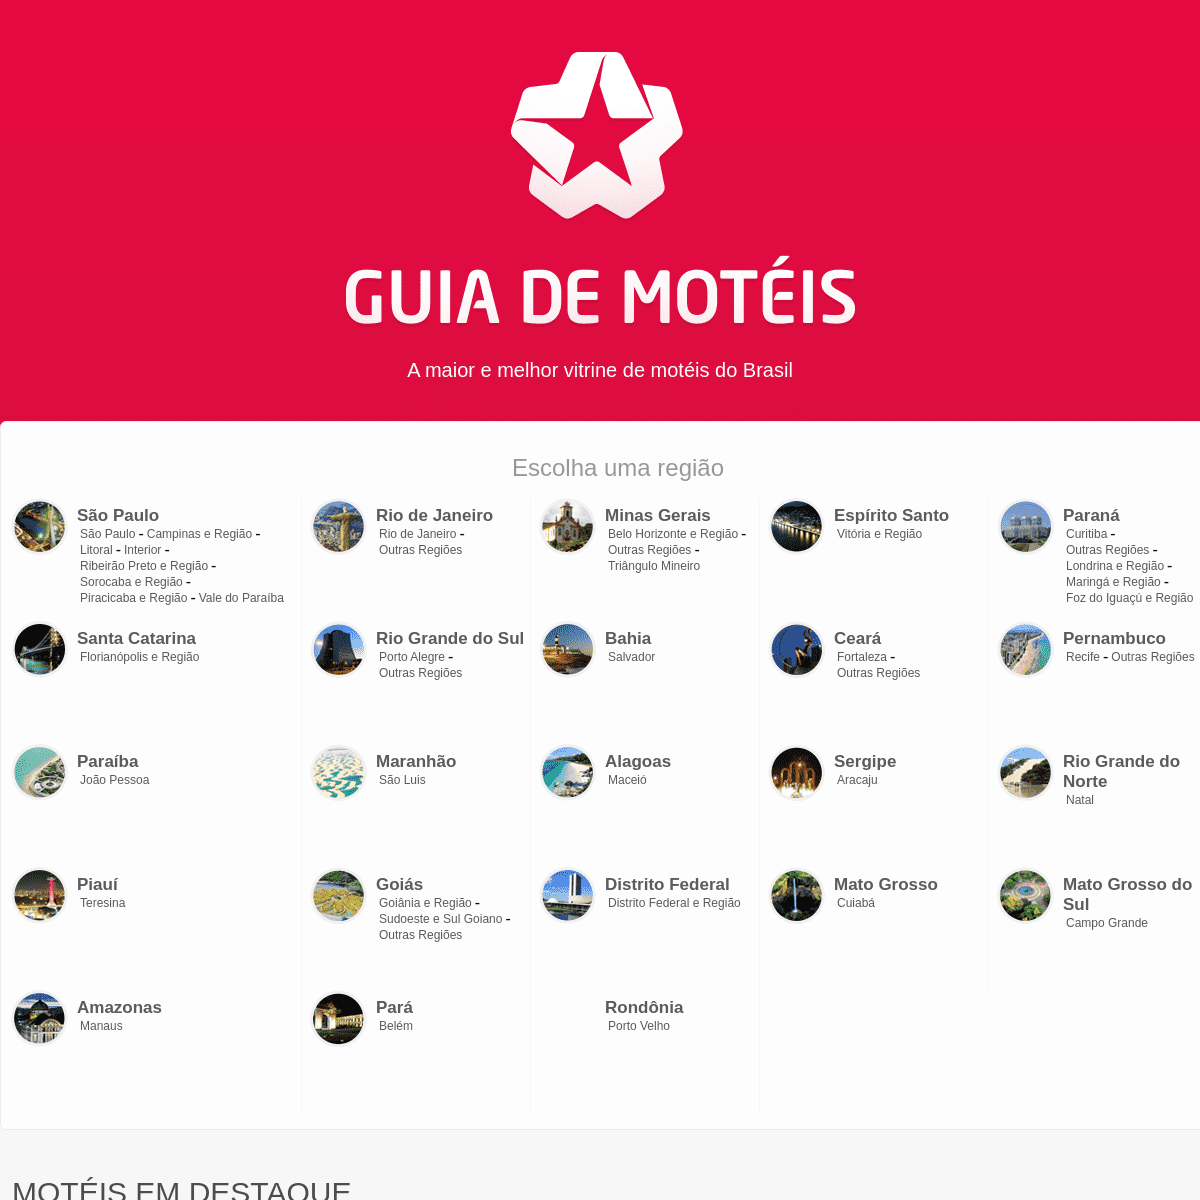 A complete backup of guiademoteis.com.br